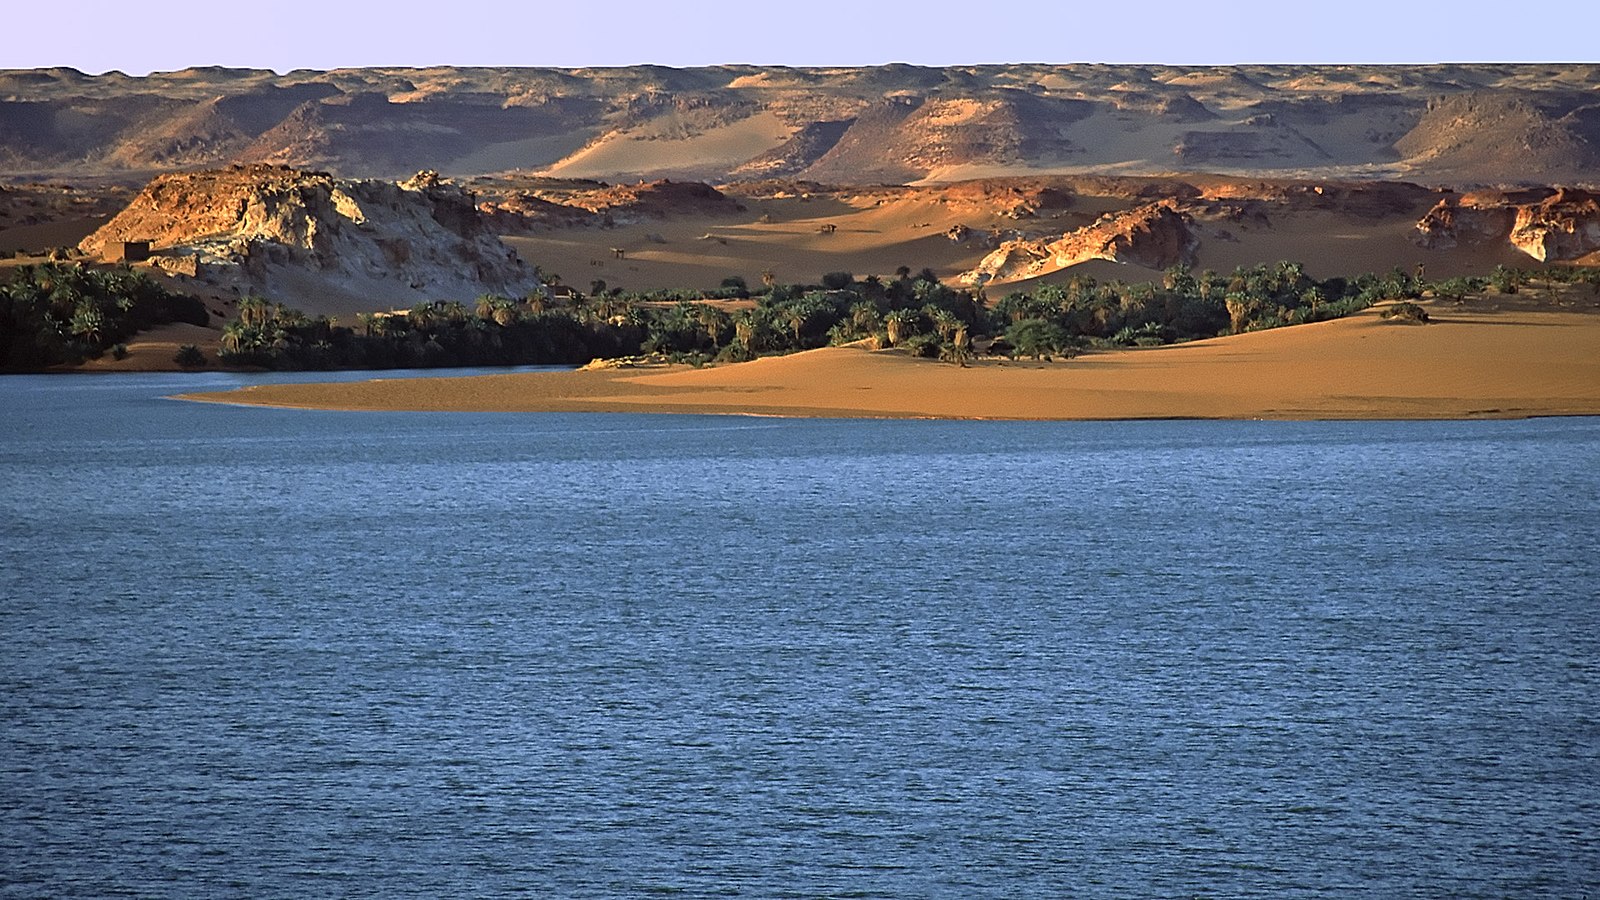 Lake Yoa, one of the Lakes of Ounianga in Chad